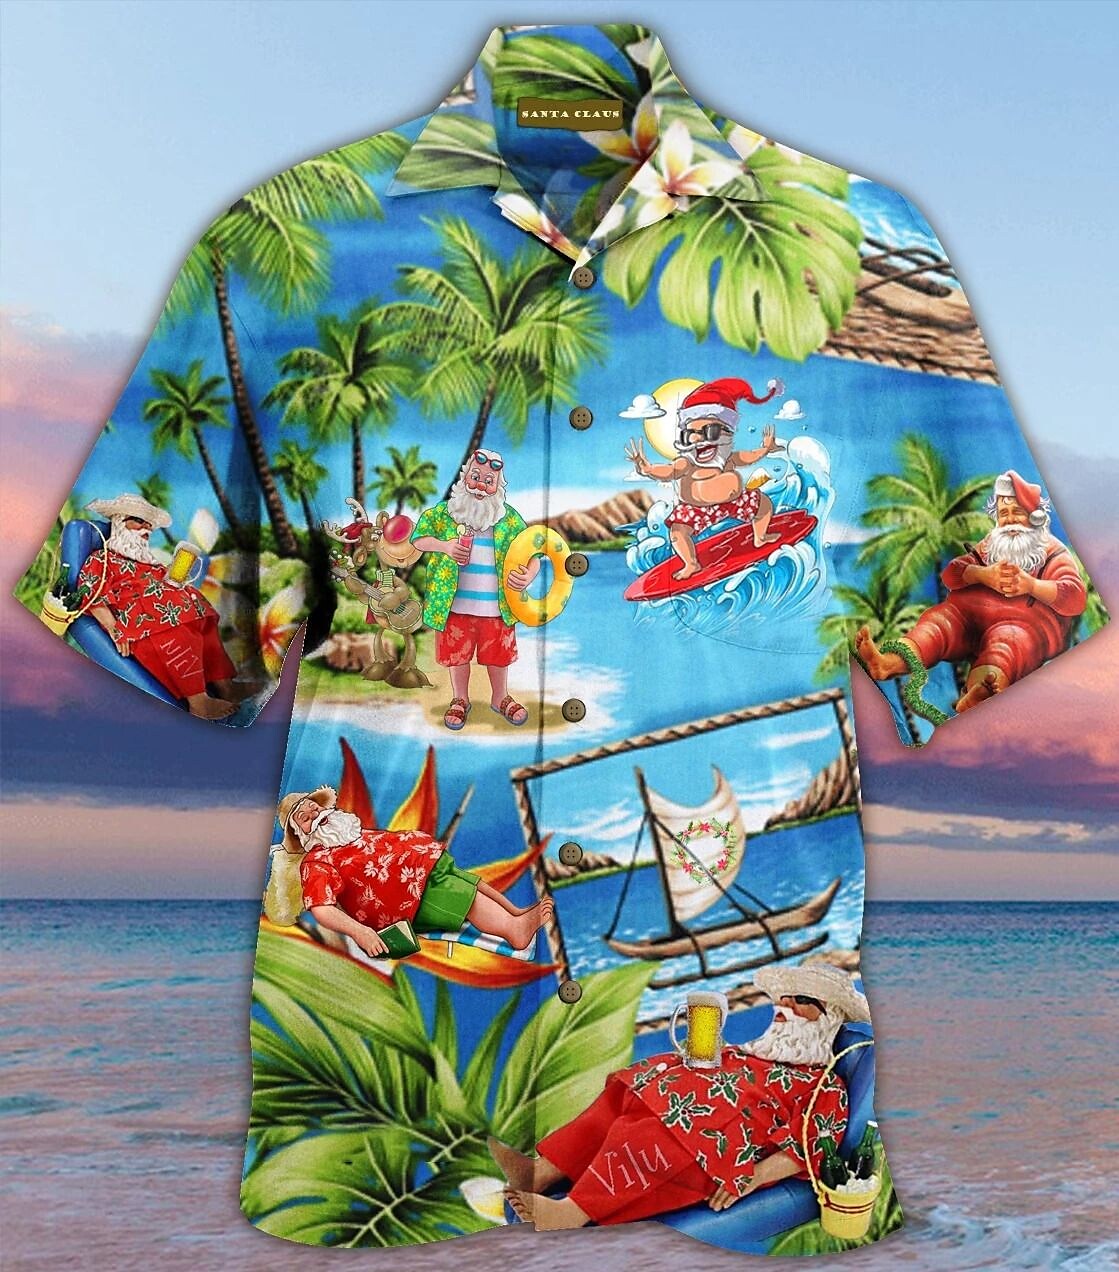 Men's T-shirt 3D Print Tree Letter Graphics Hawaii Vacation Shirts